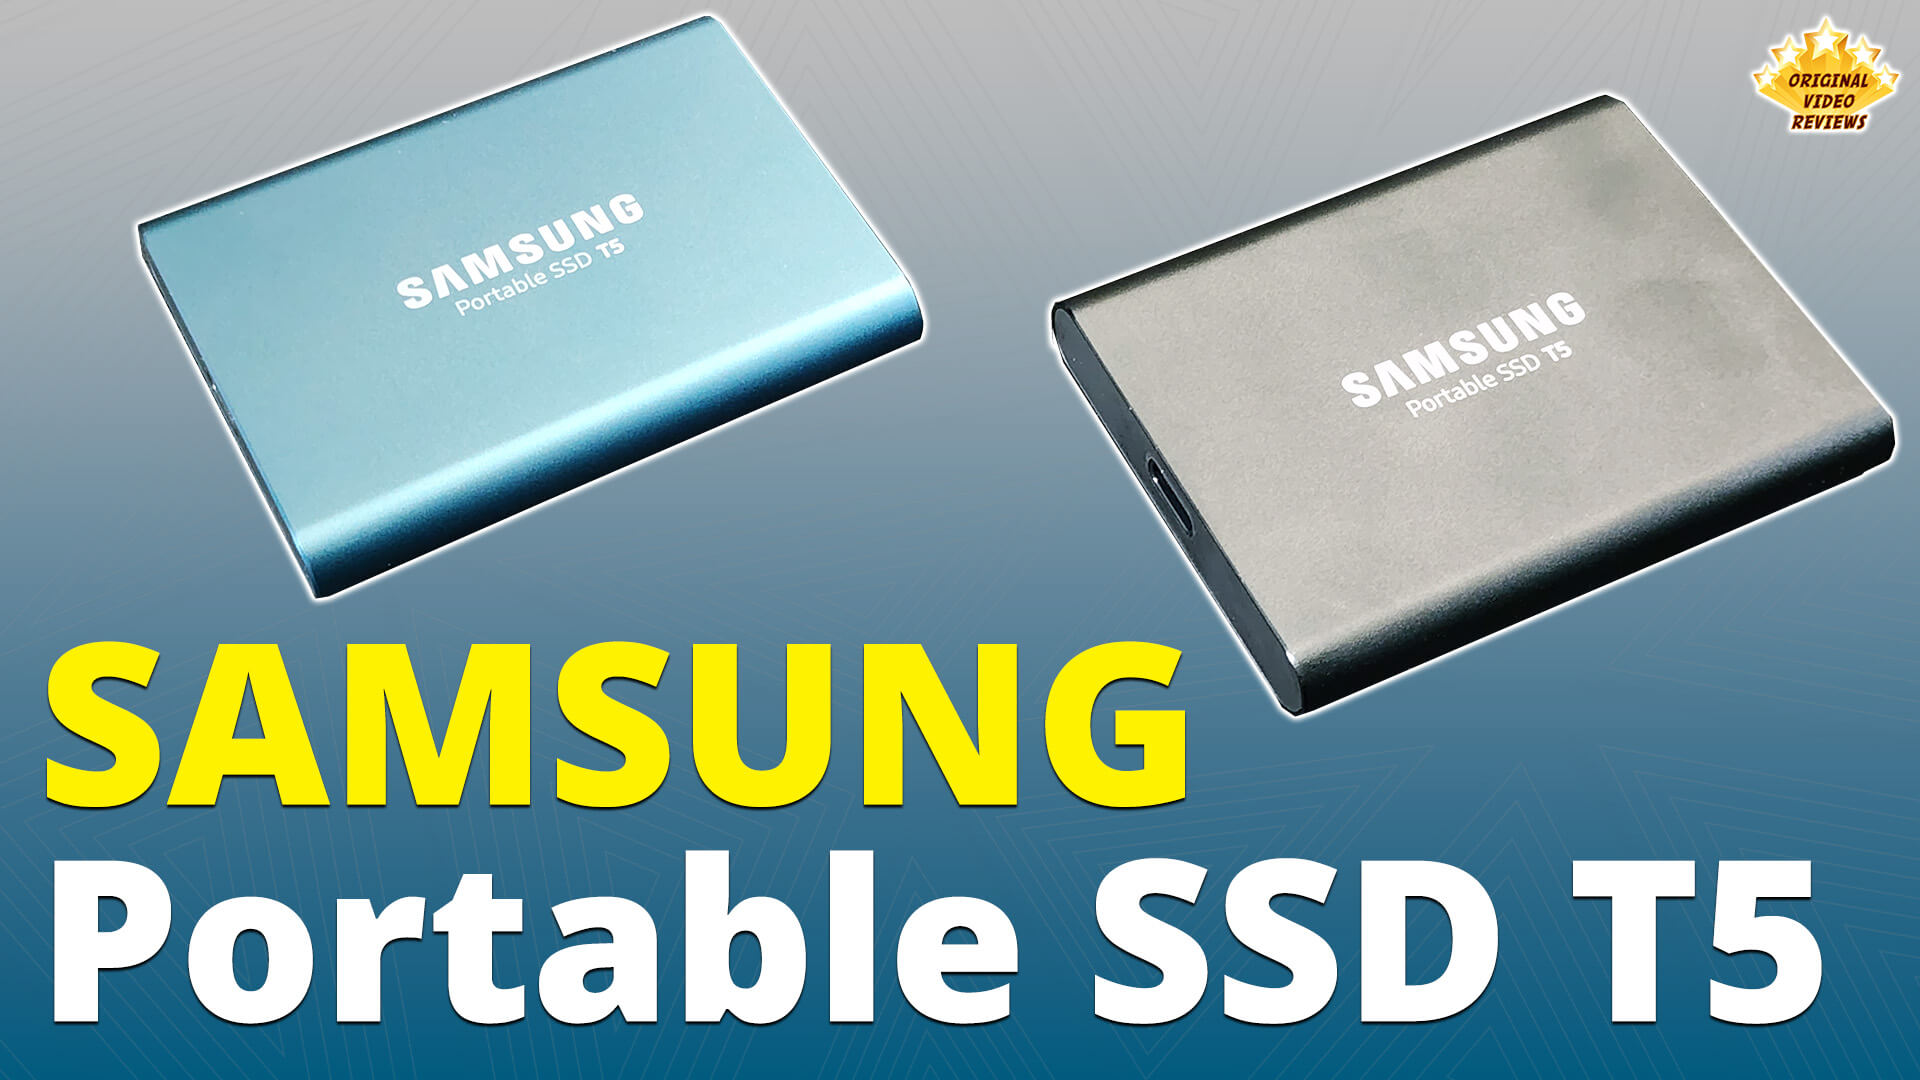 Afledning Sved Arbejdsgiver SAMSUNG T5 Portable SSD 1TB - Original Video Reviews